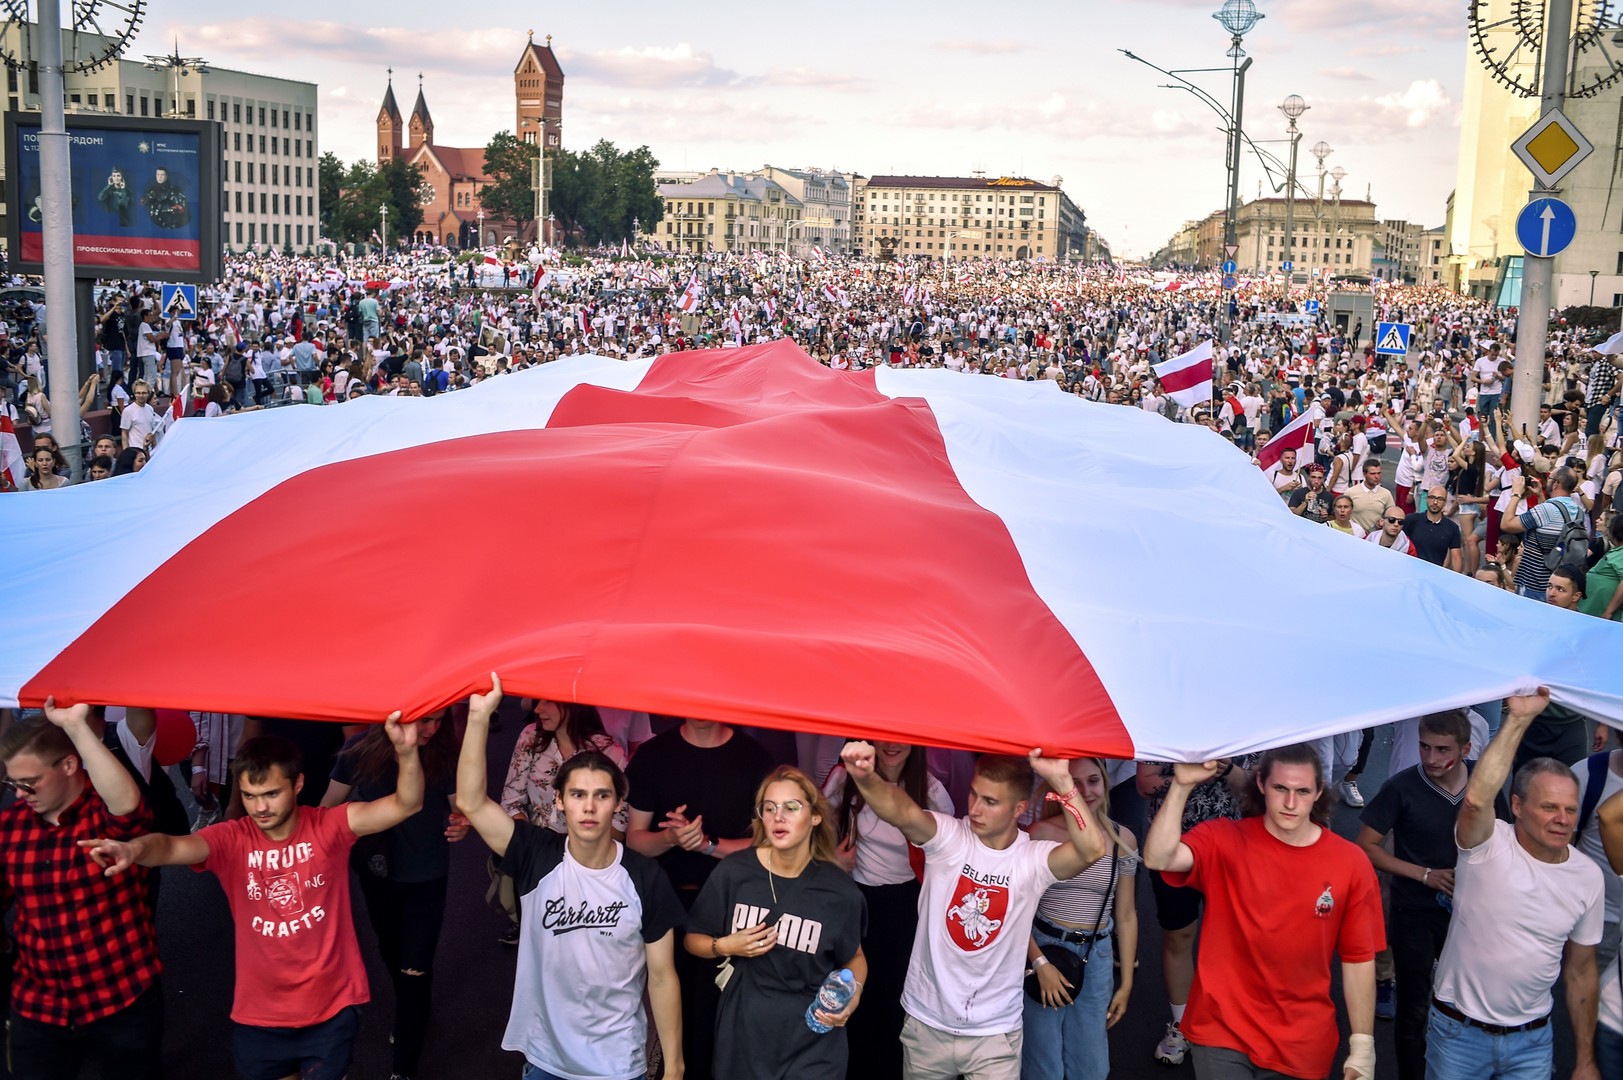 Belomaidan – Zehntausende demonstrieren in Minsk gegen Präsident Lukaschenko